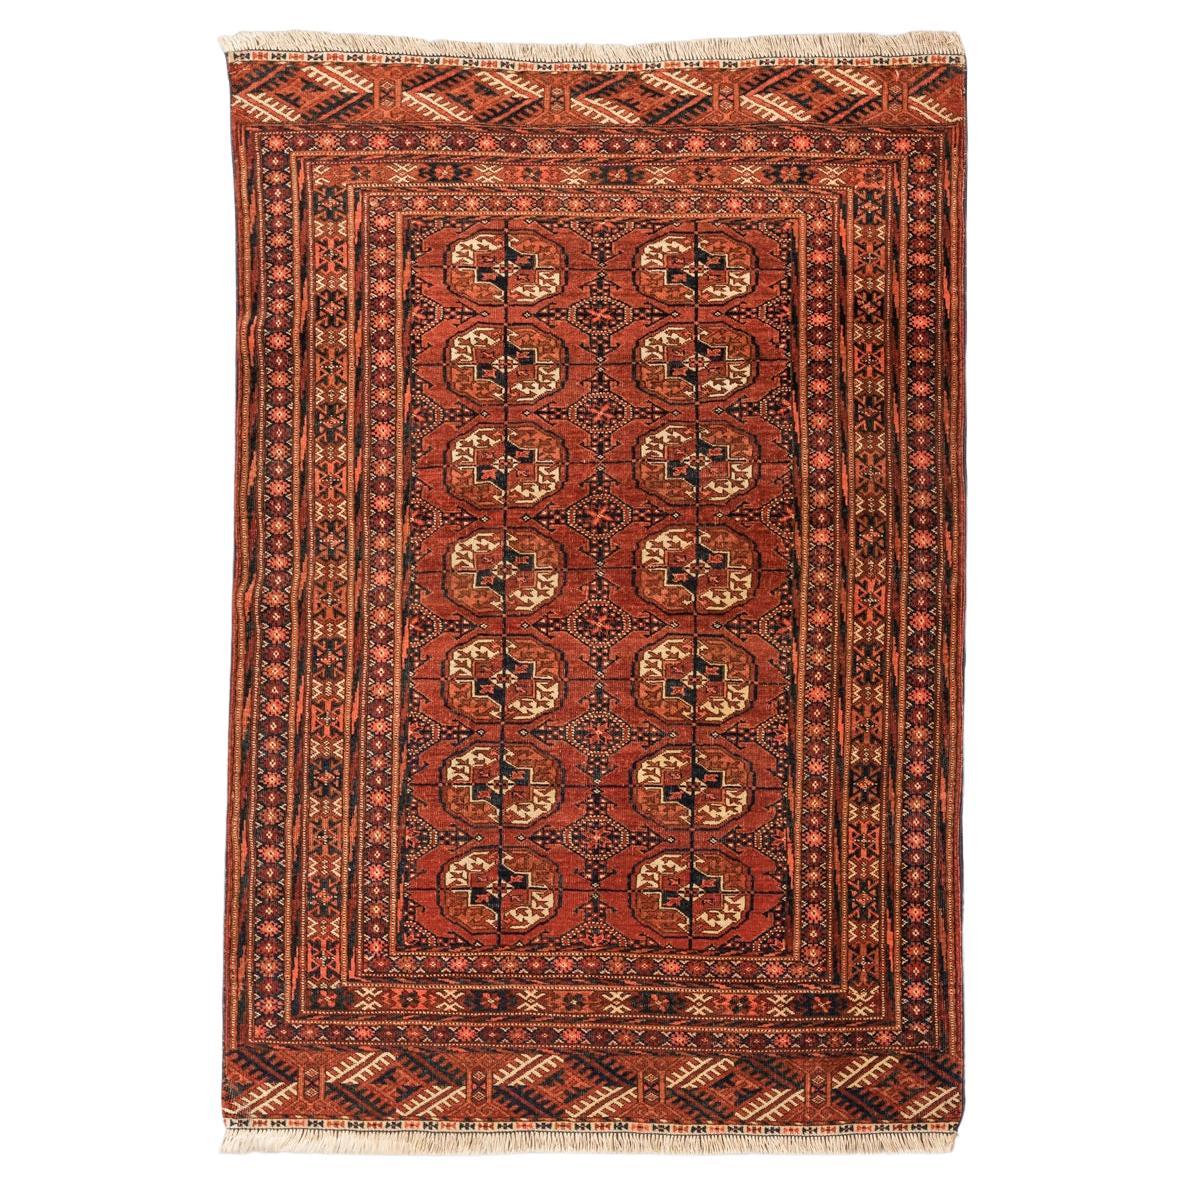 20th Century Turkestan Wool Rug, Tekke, "Guls" Classical, C. 1920. 1.50 x 1.00 m For Sale